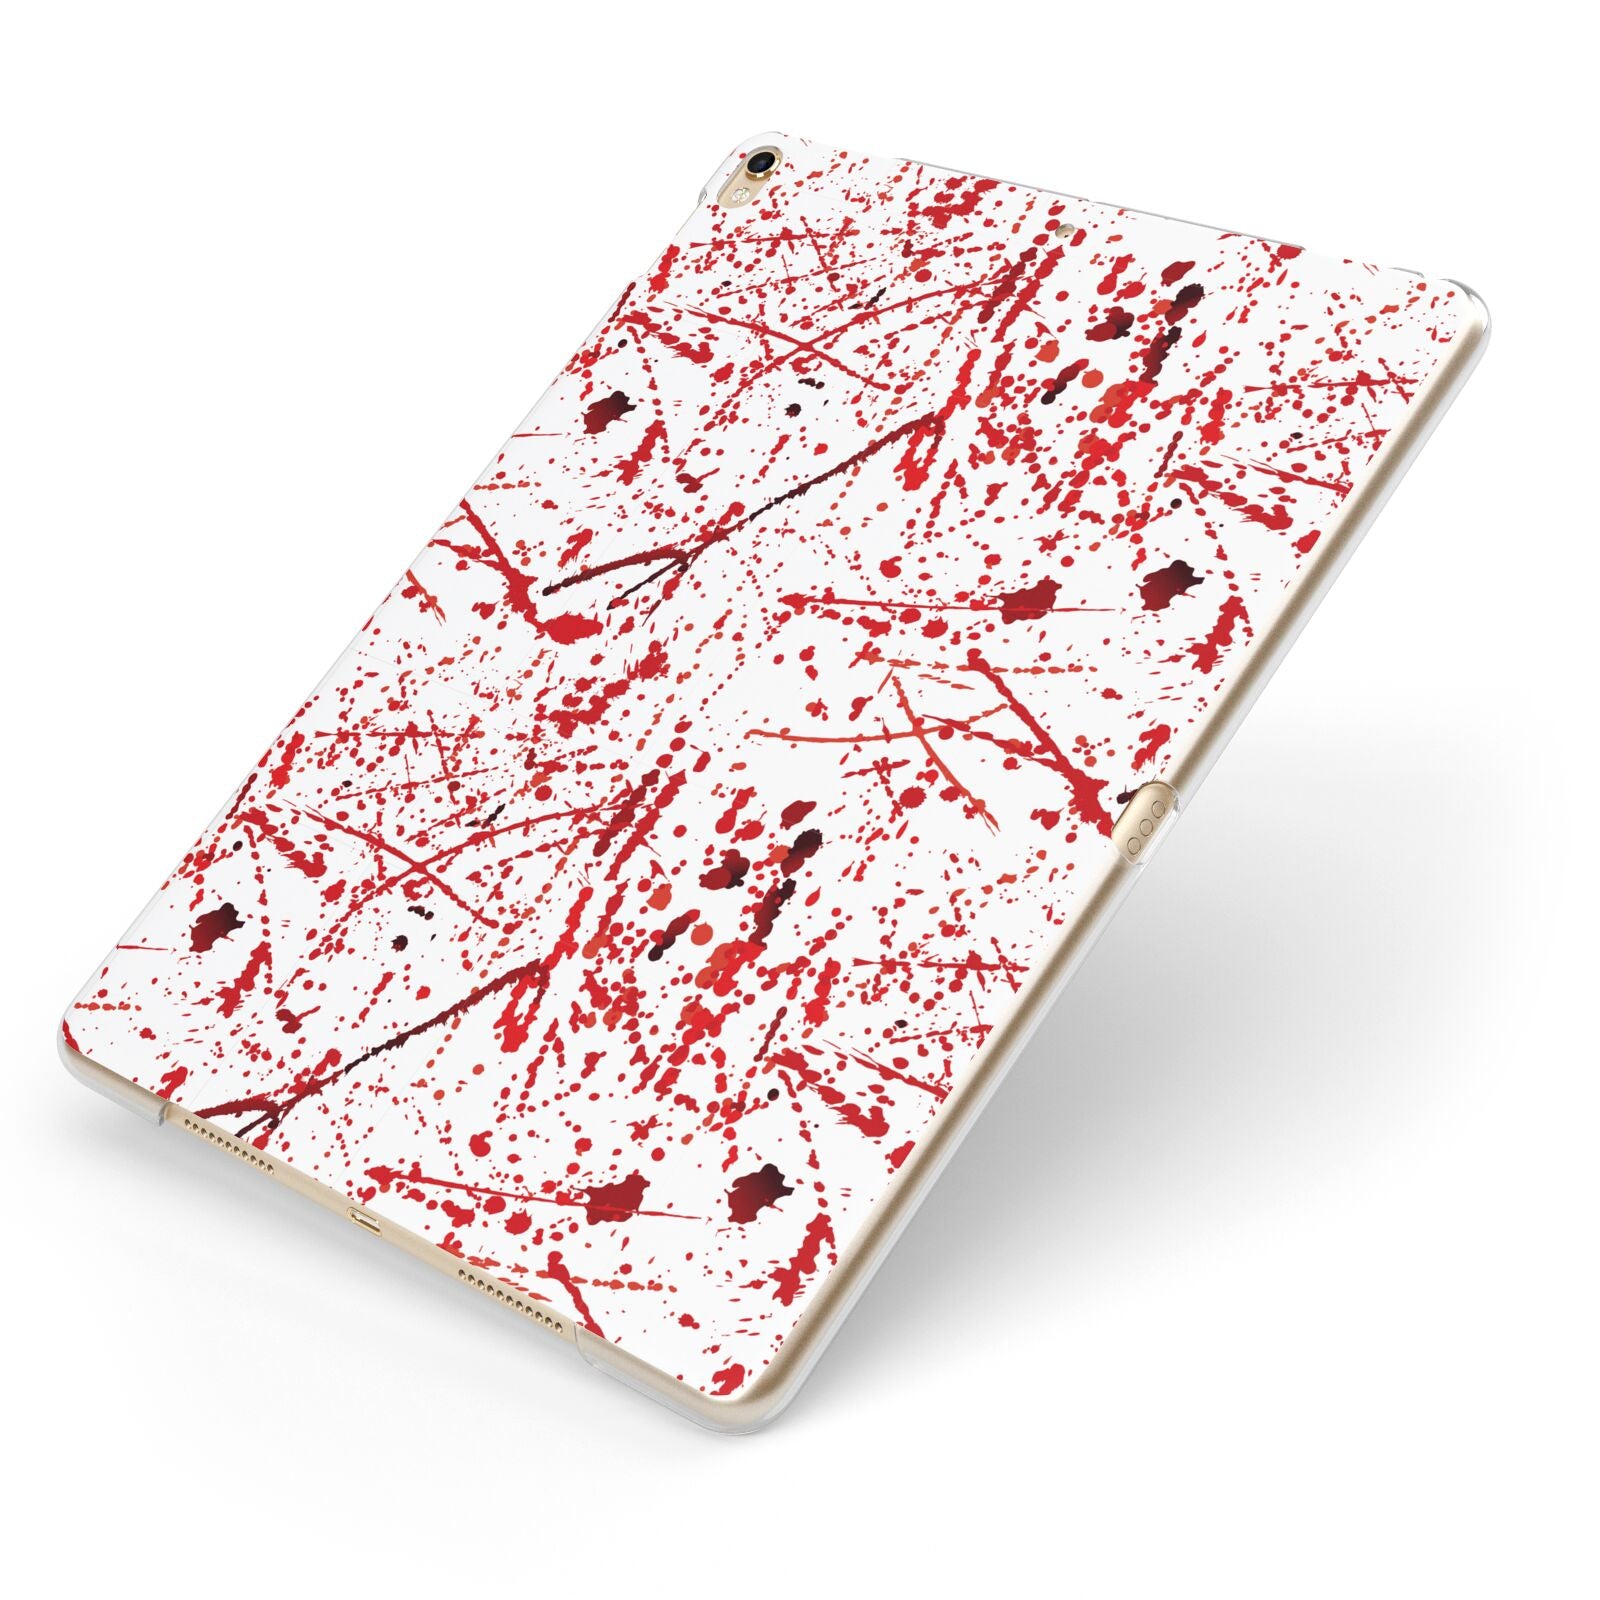 Blood Splatter Apple iPad Case on Gold iPad Side View